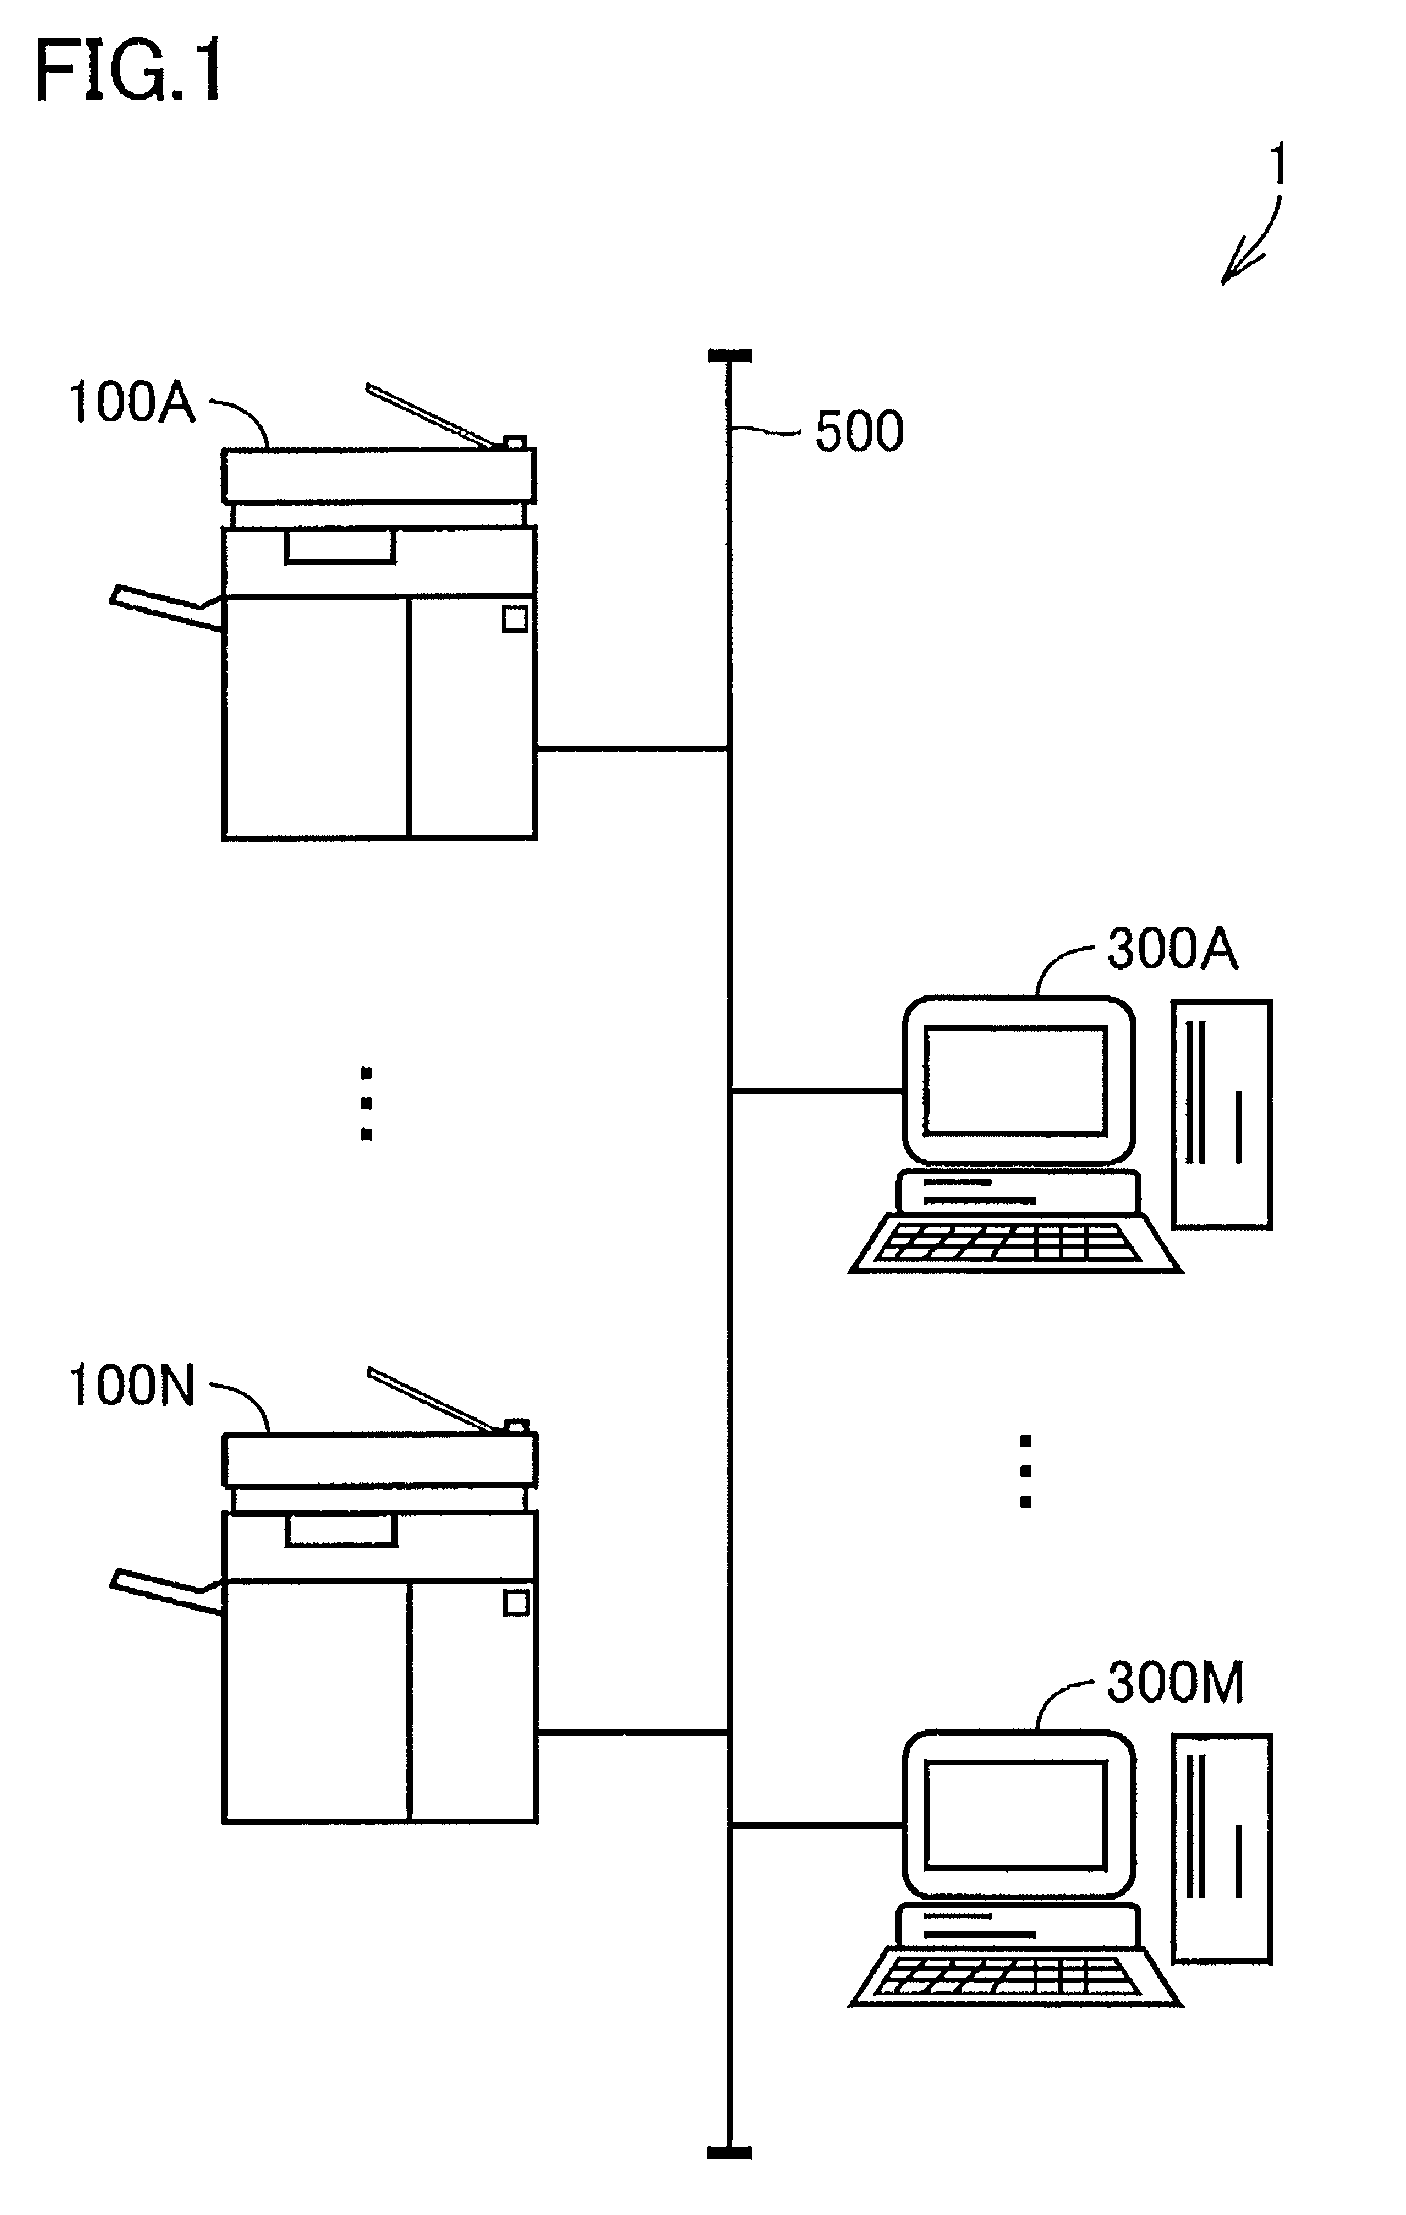 Image forming apparatus performing combine printing